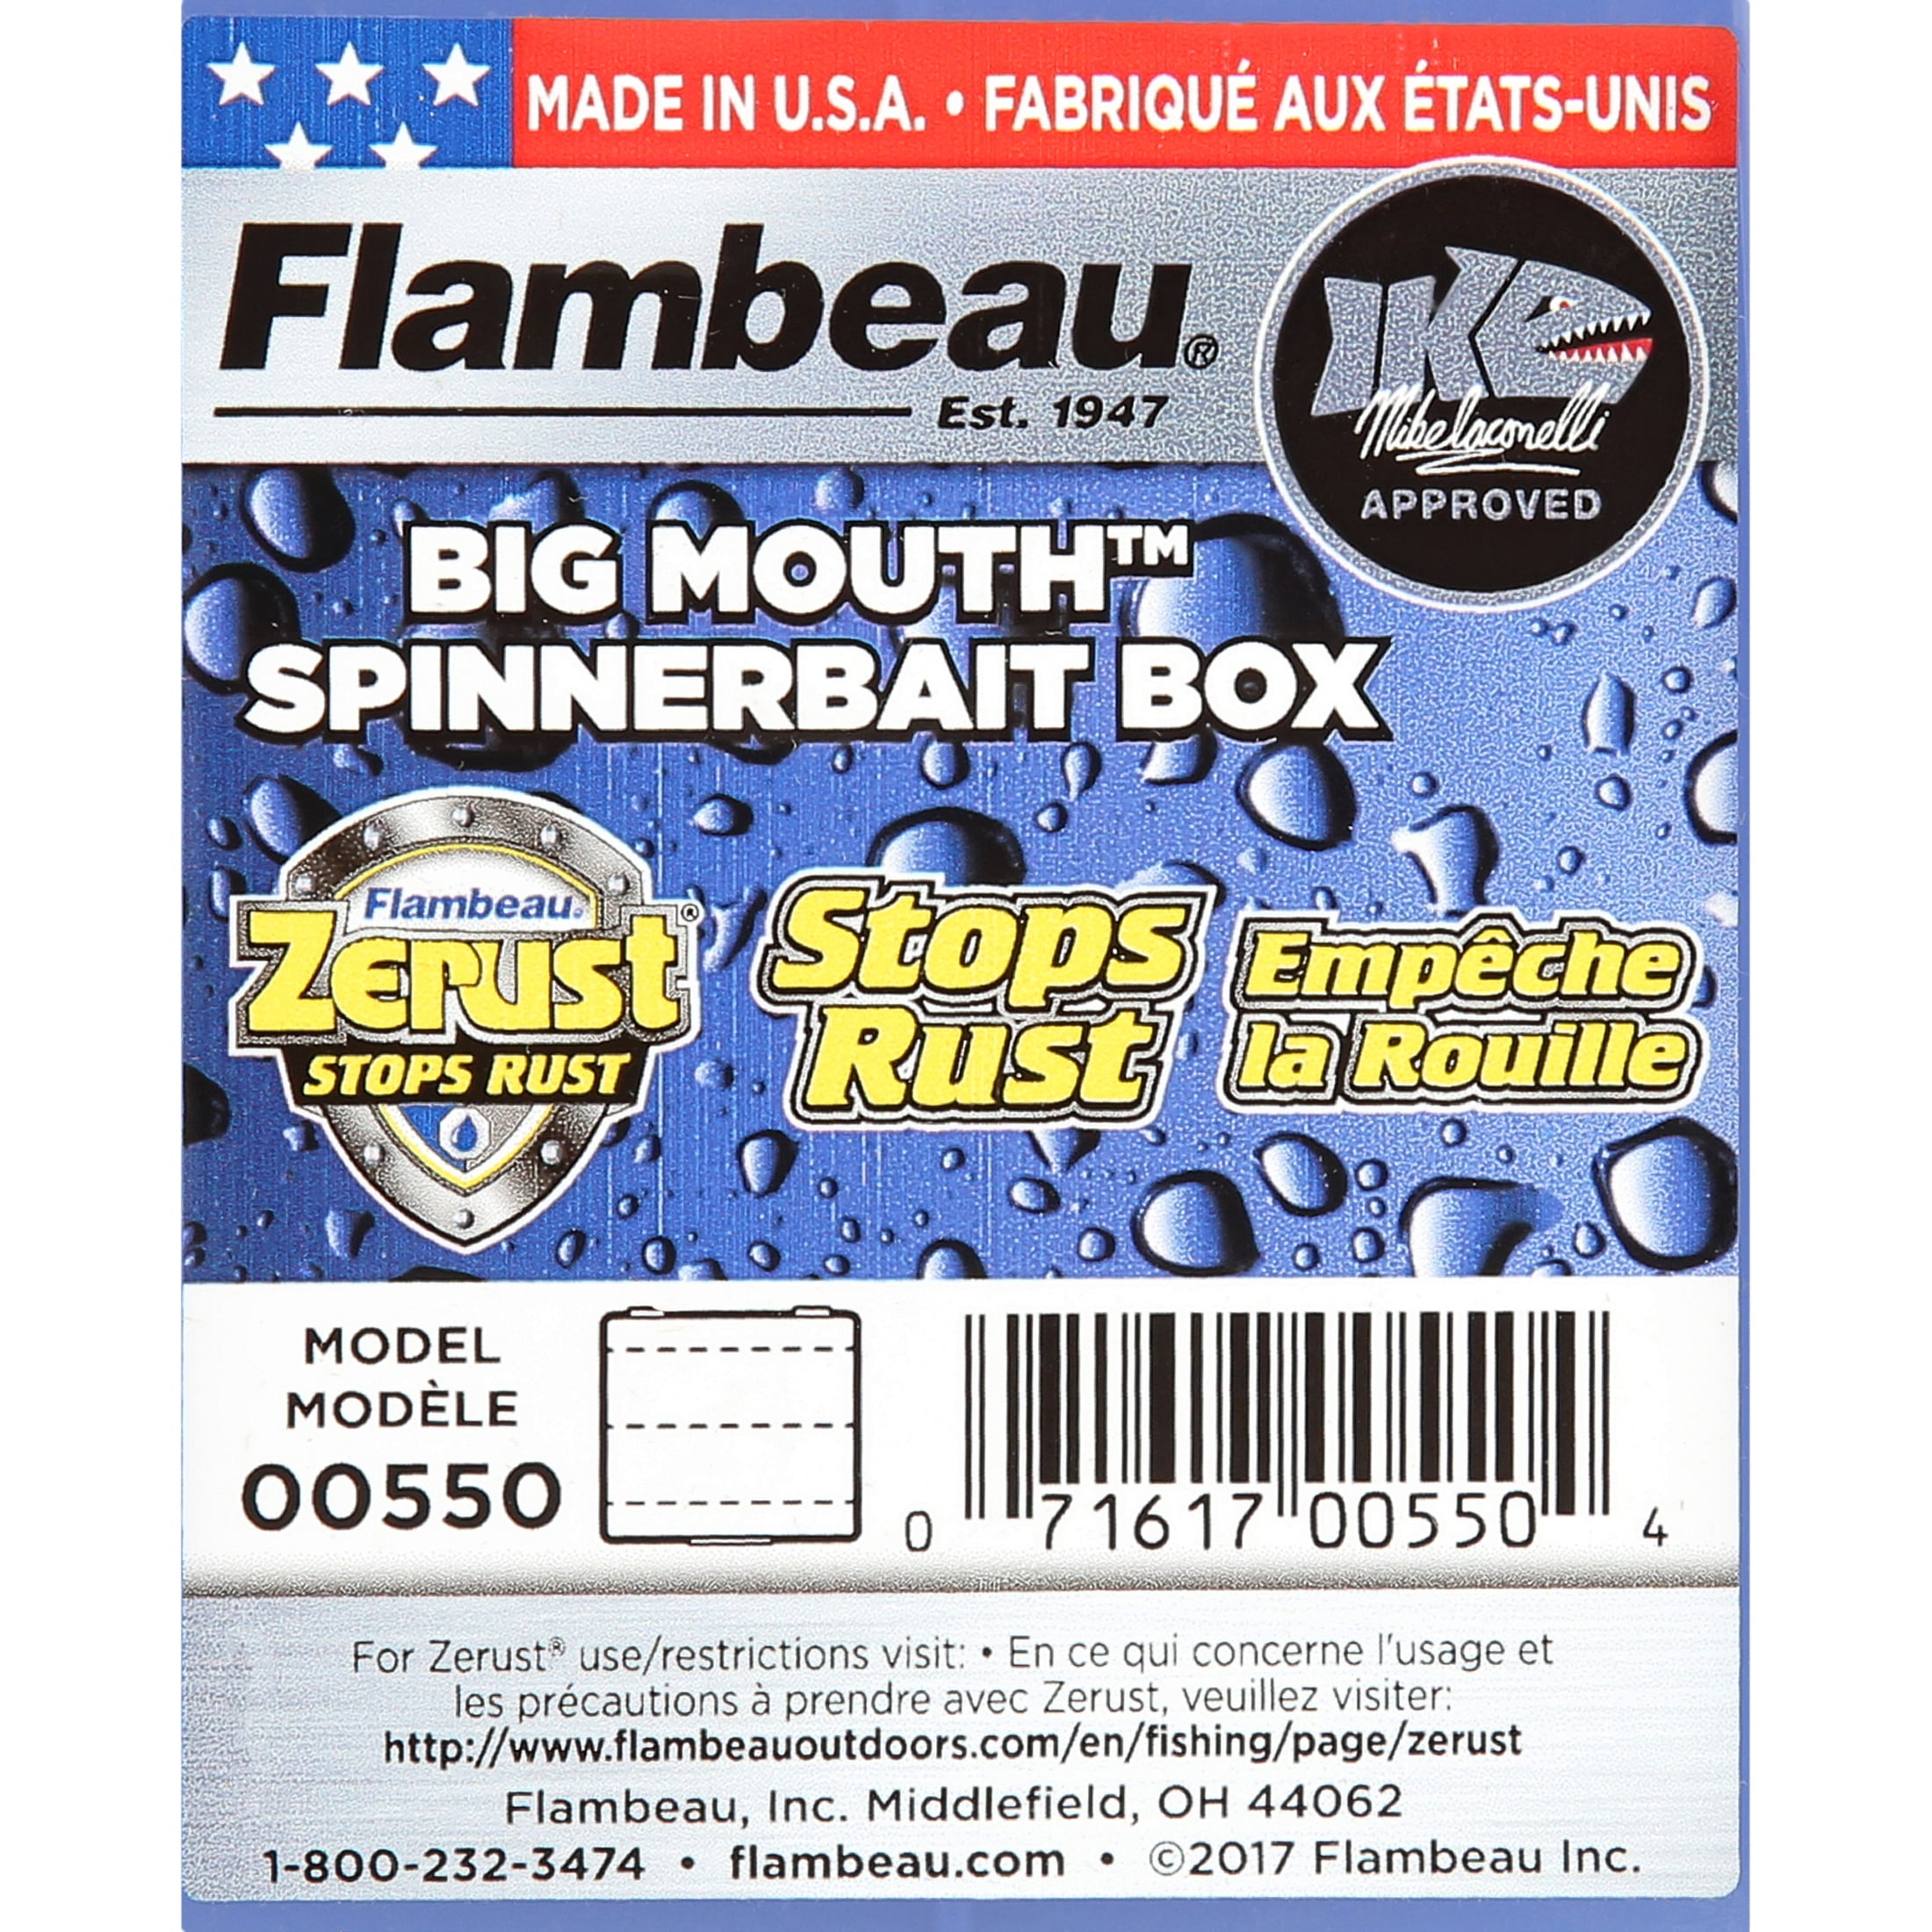 Flambeau 355bmr Big Mouth Tackle Box Blue Swirl 89 Piece Kit